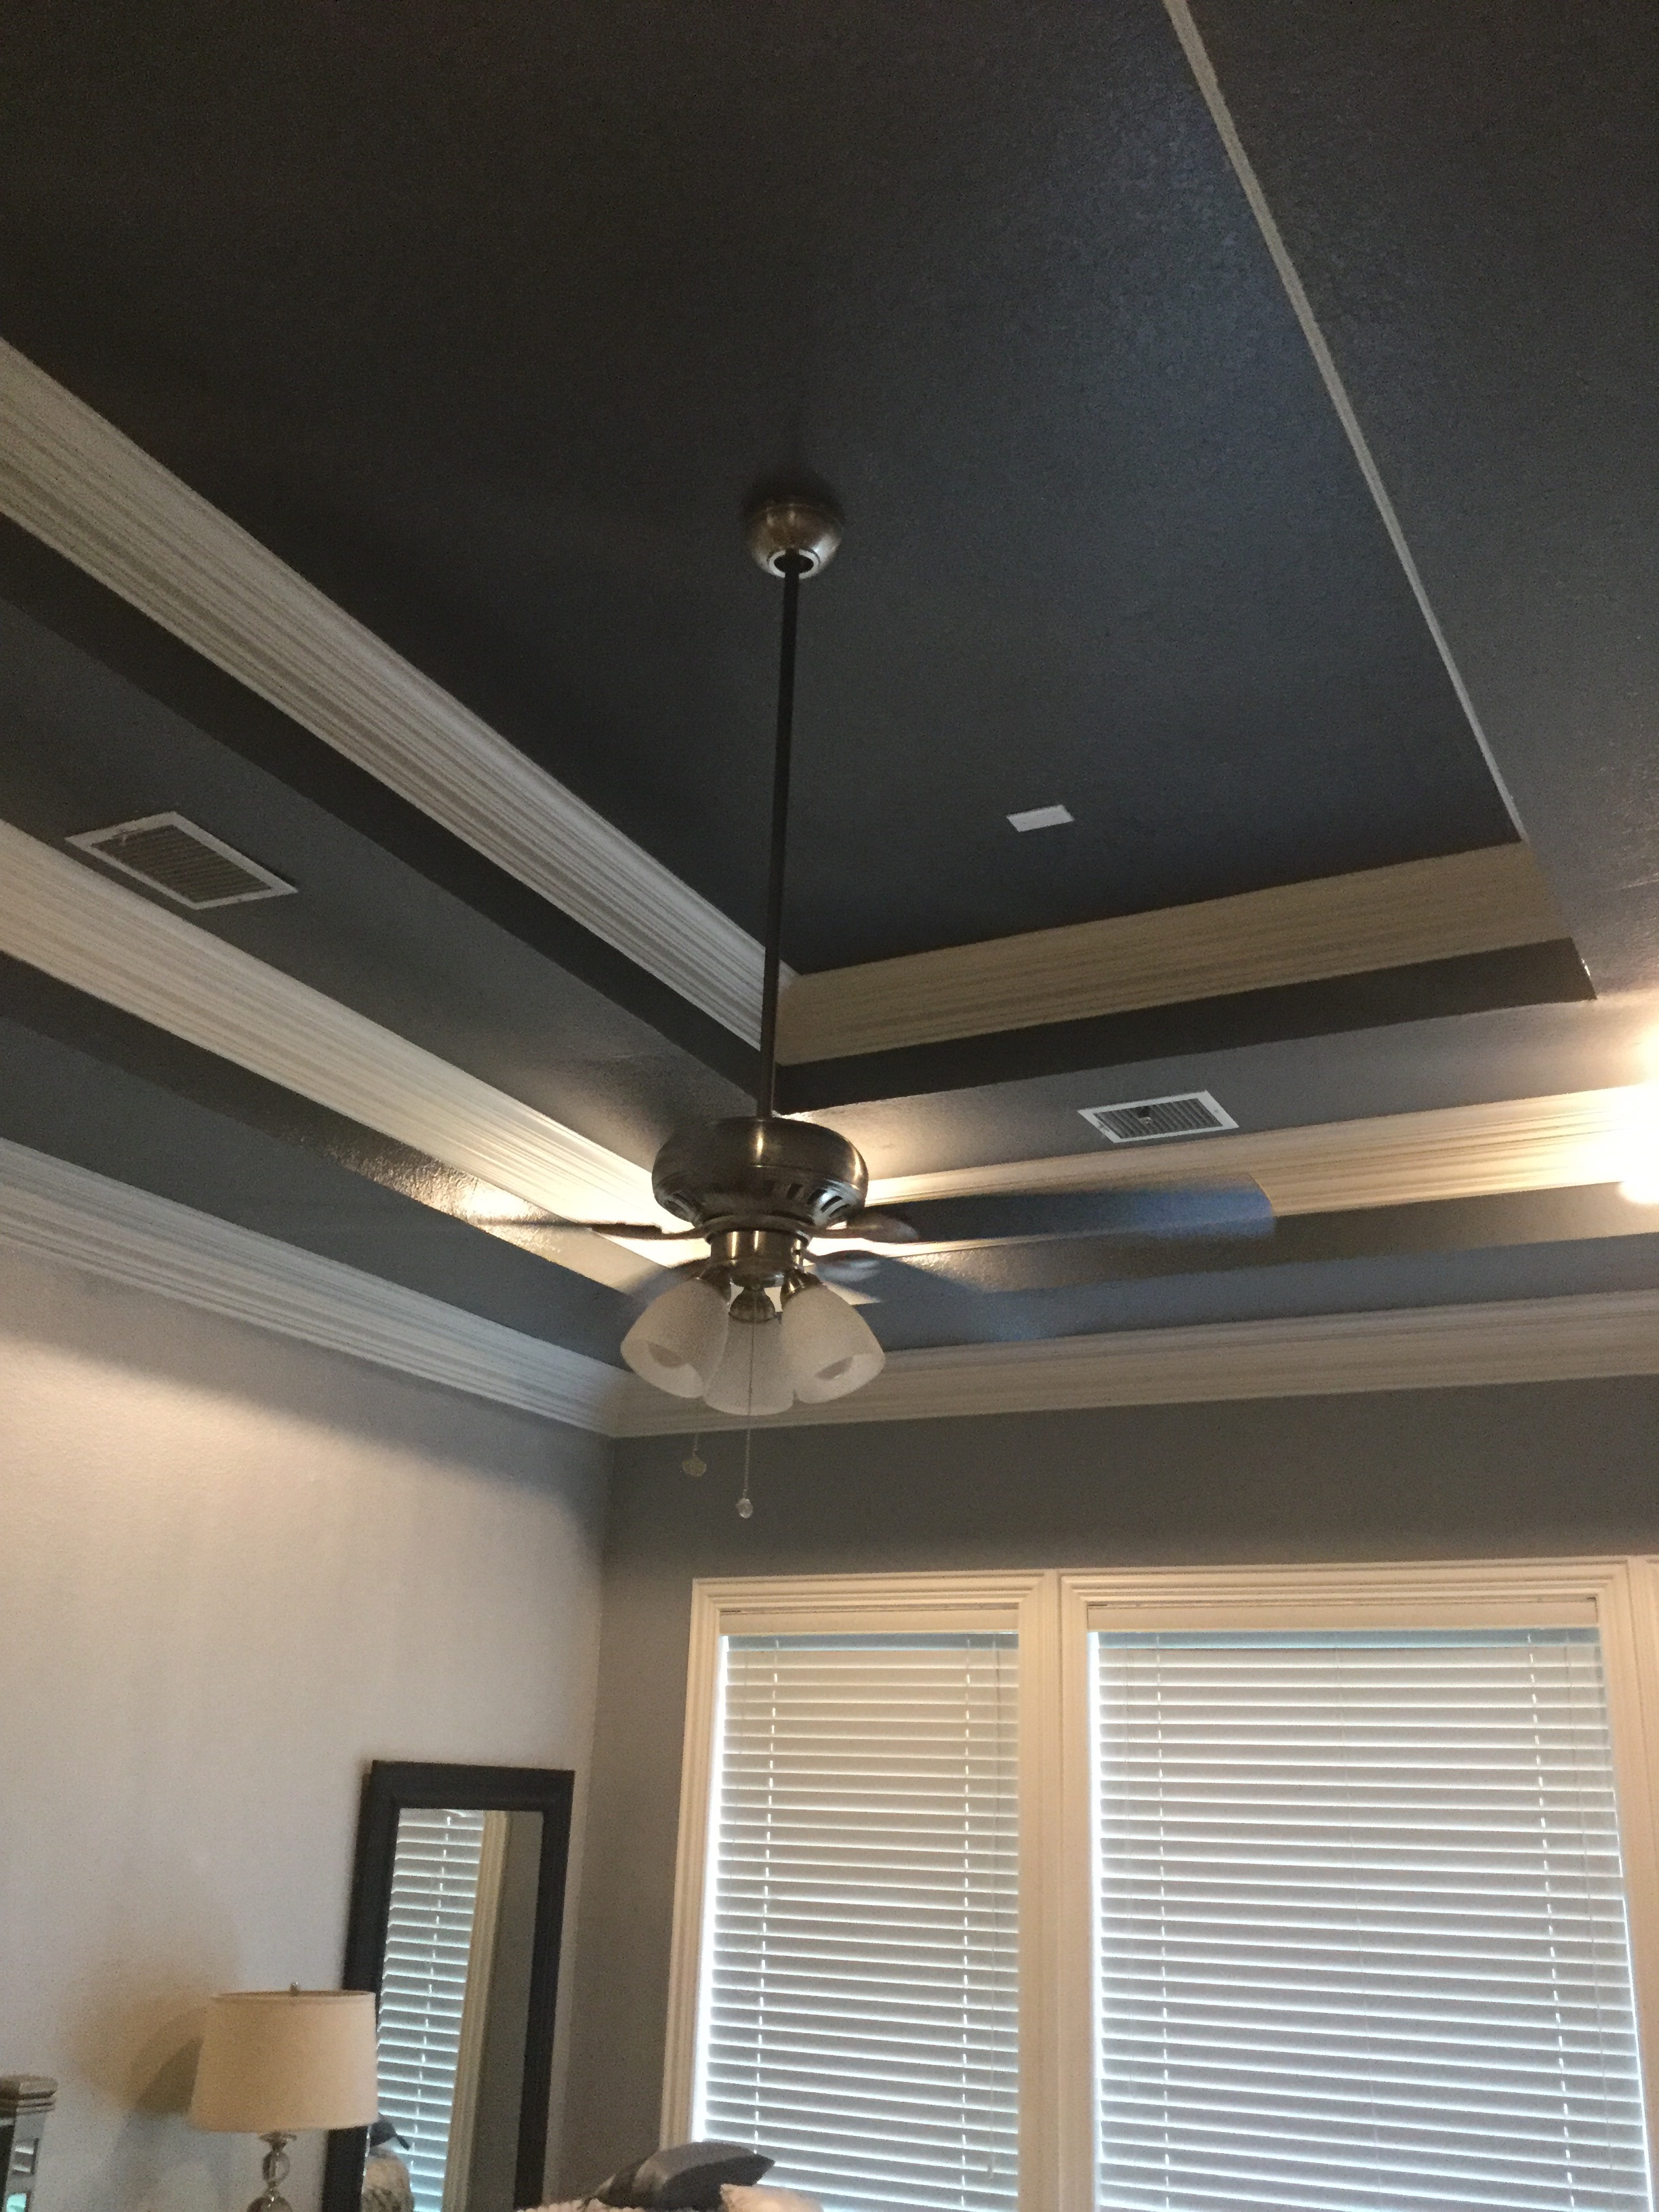 Ceiling Fan Installation by TLC Electrical, Southlake TX electrician